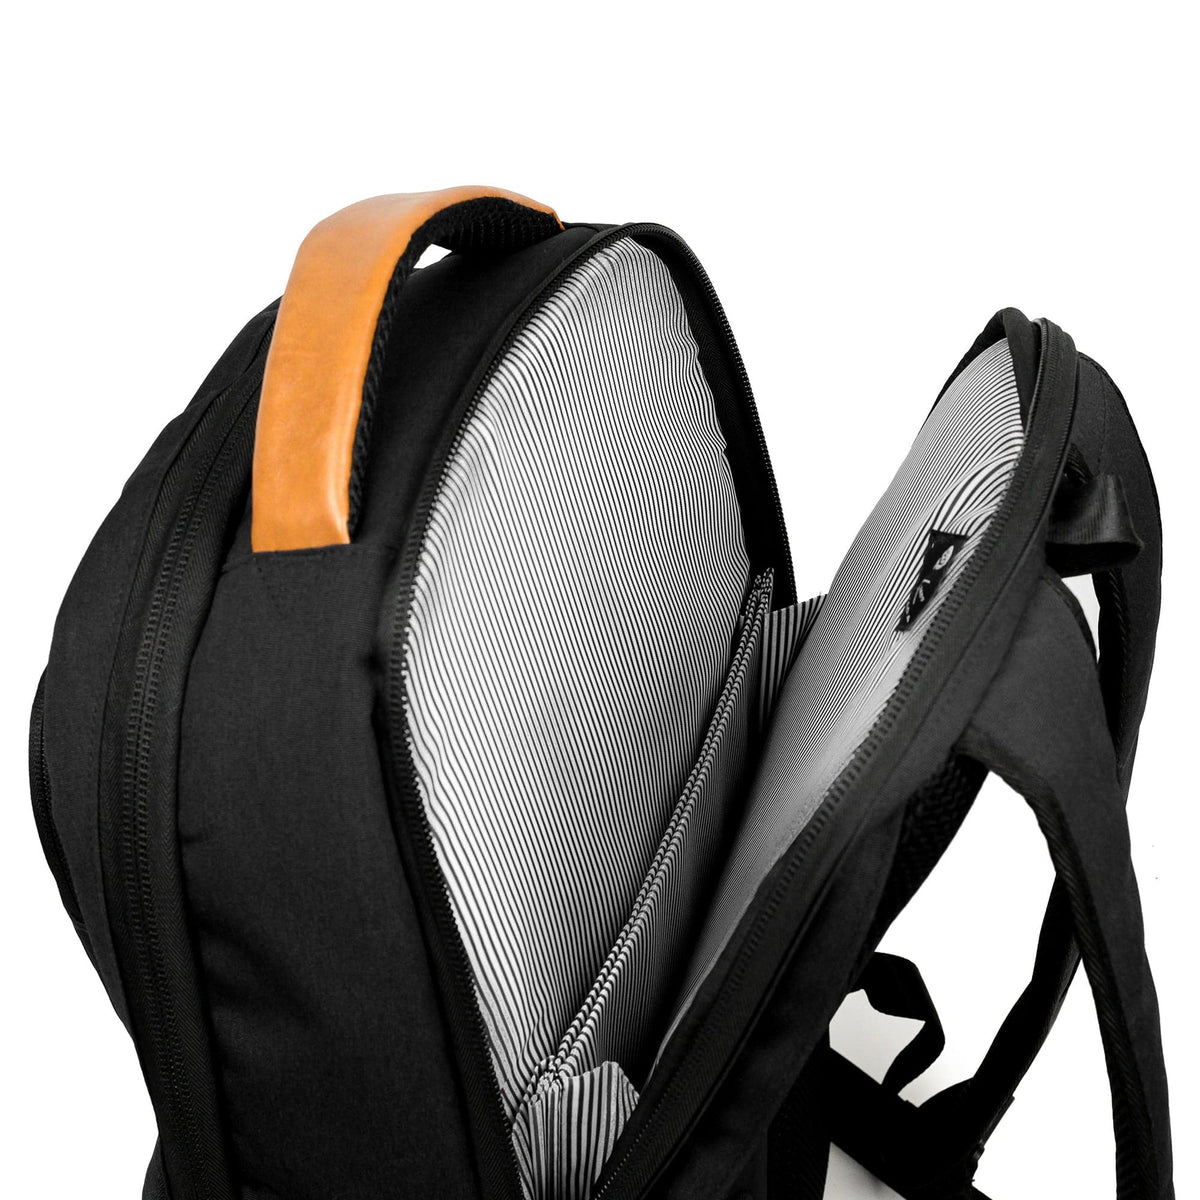 PKG Aurora 16" Laptop Backpack